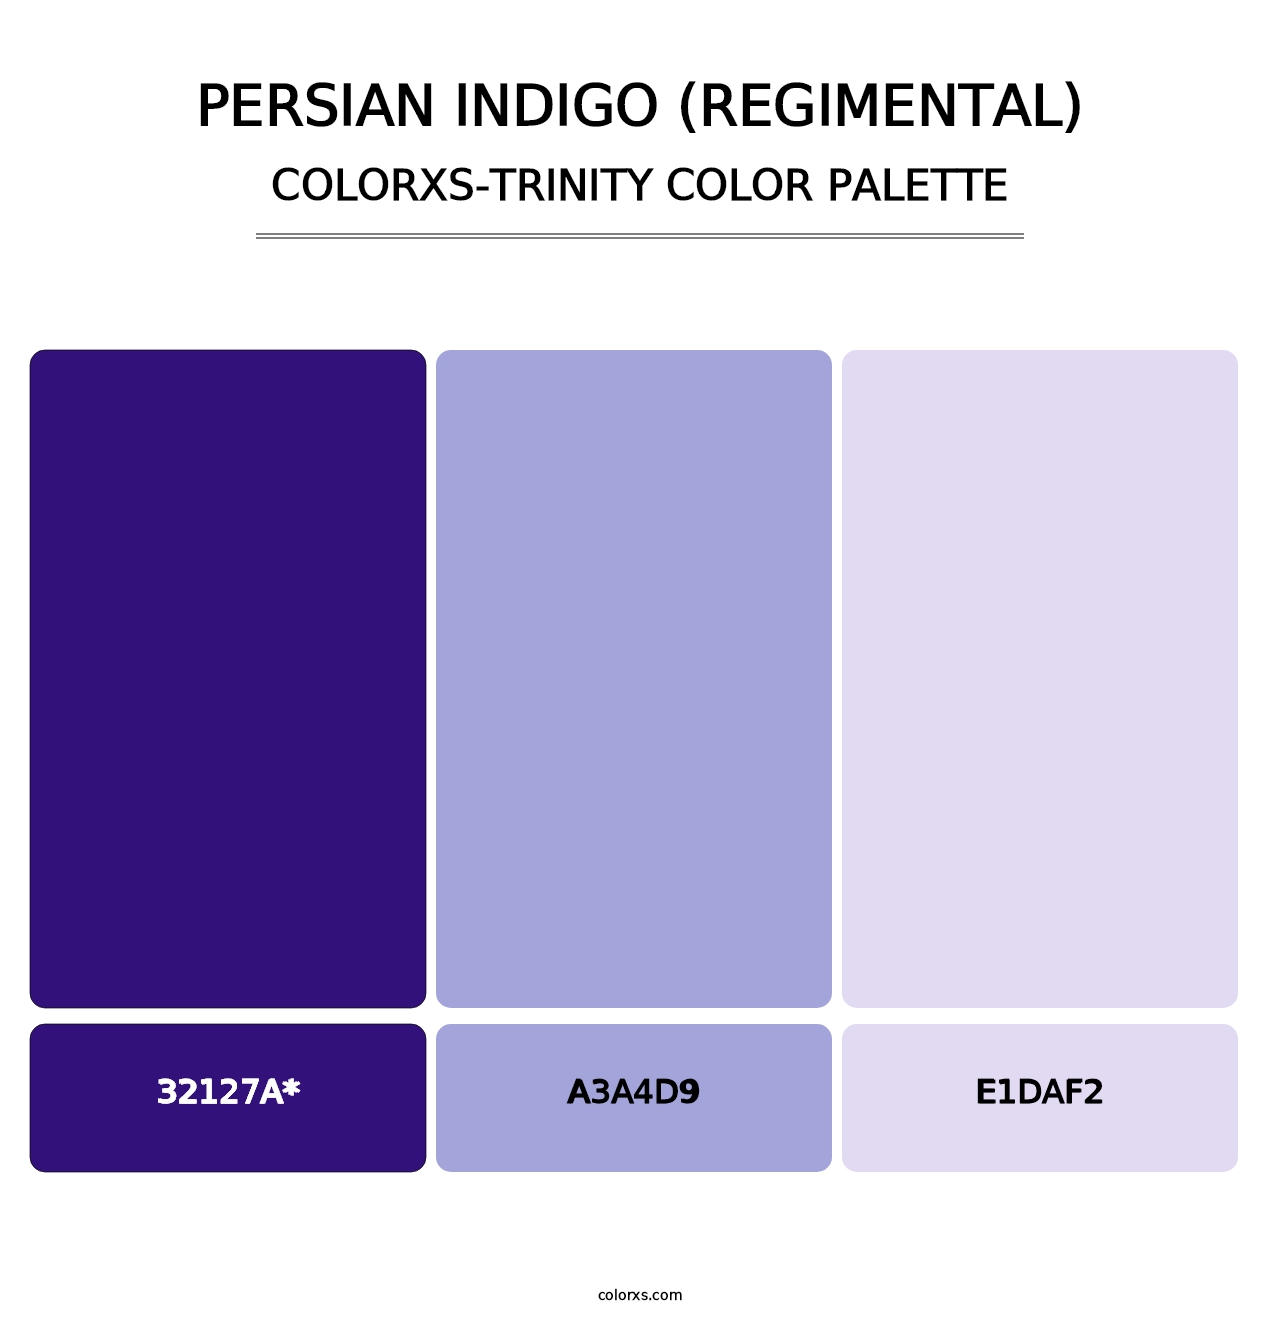 Persian Indigo (Regimental) - Colorxs Trinity Palette